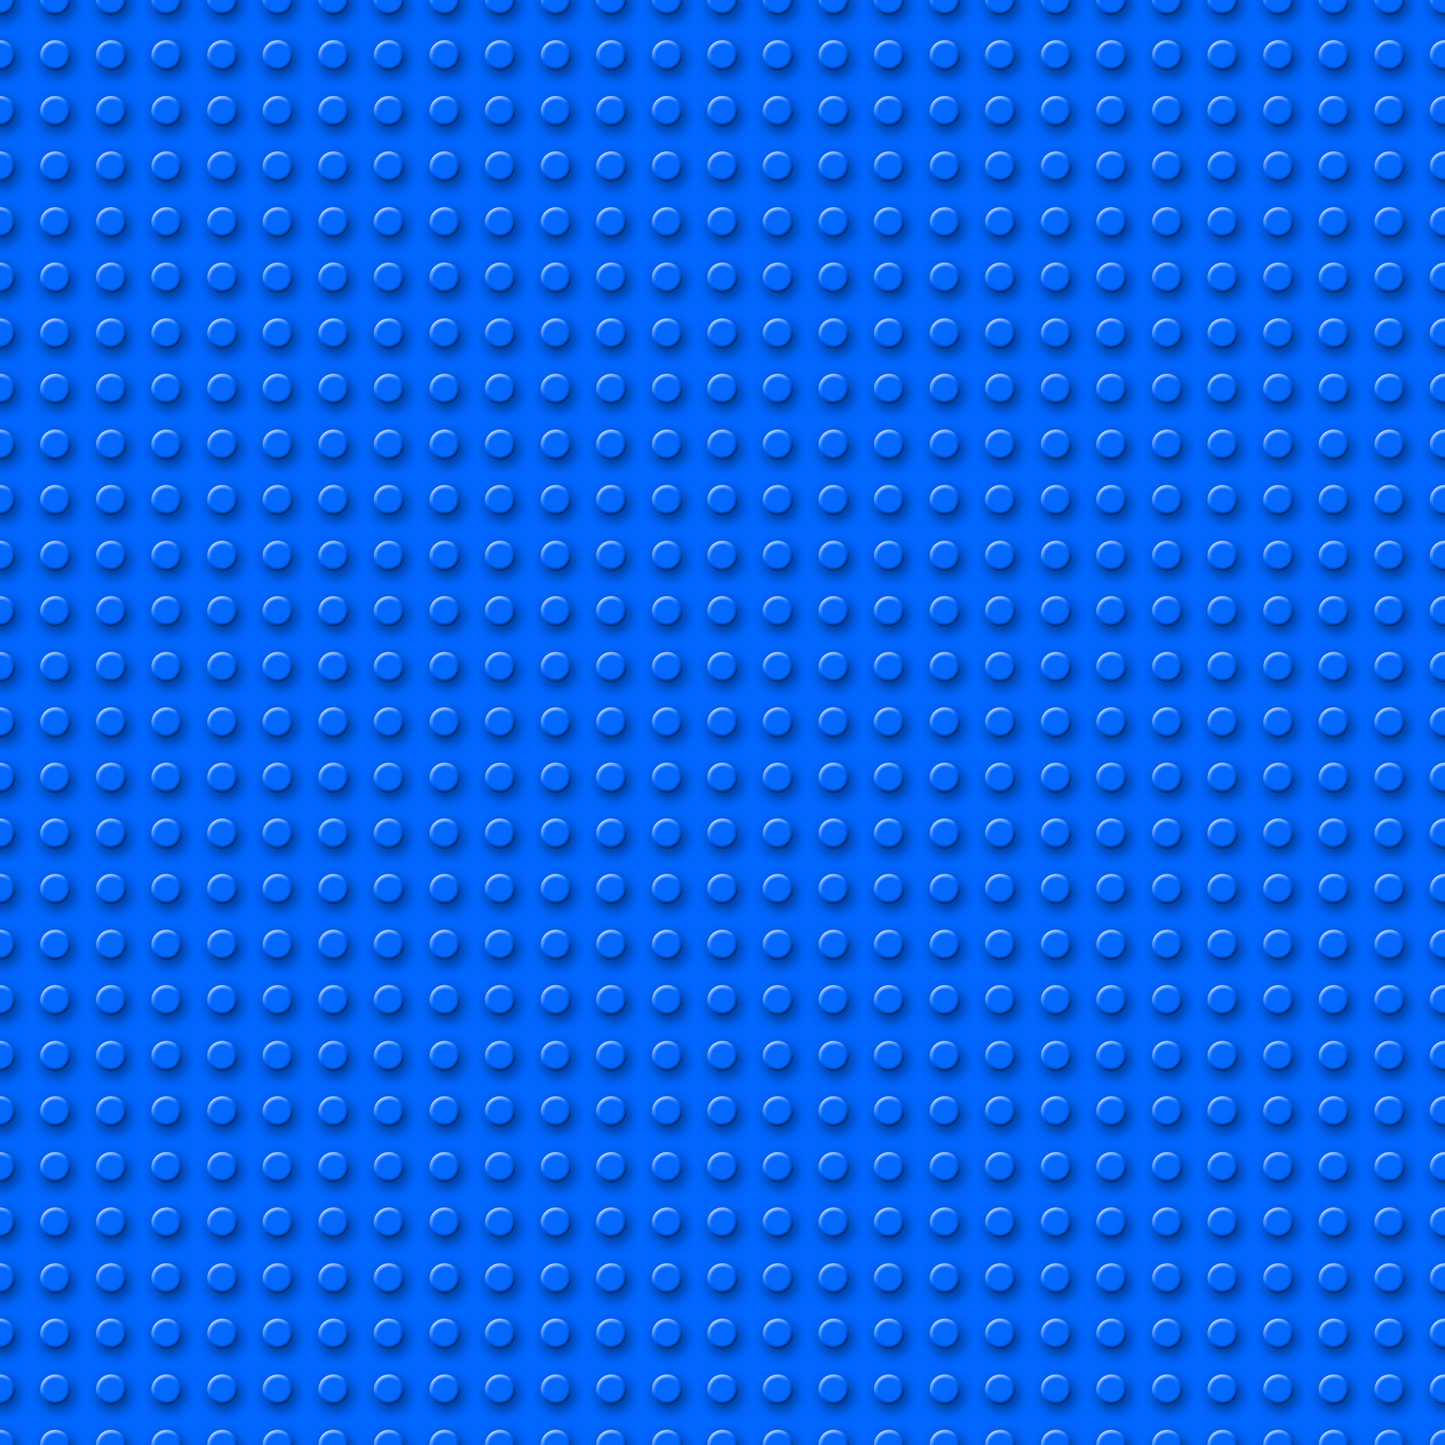 Building Blocks - Blue - 035